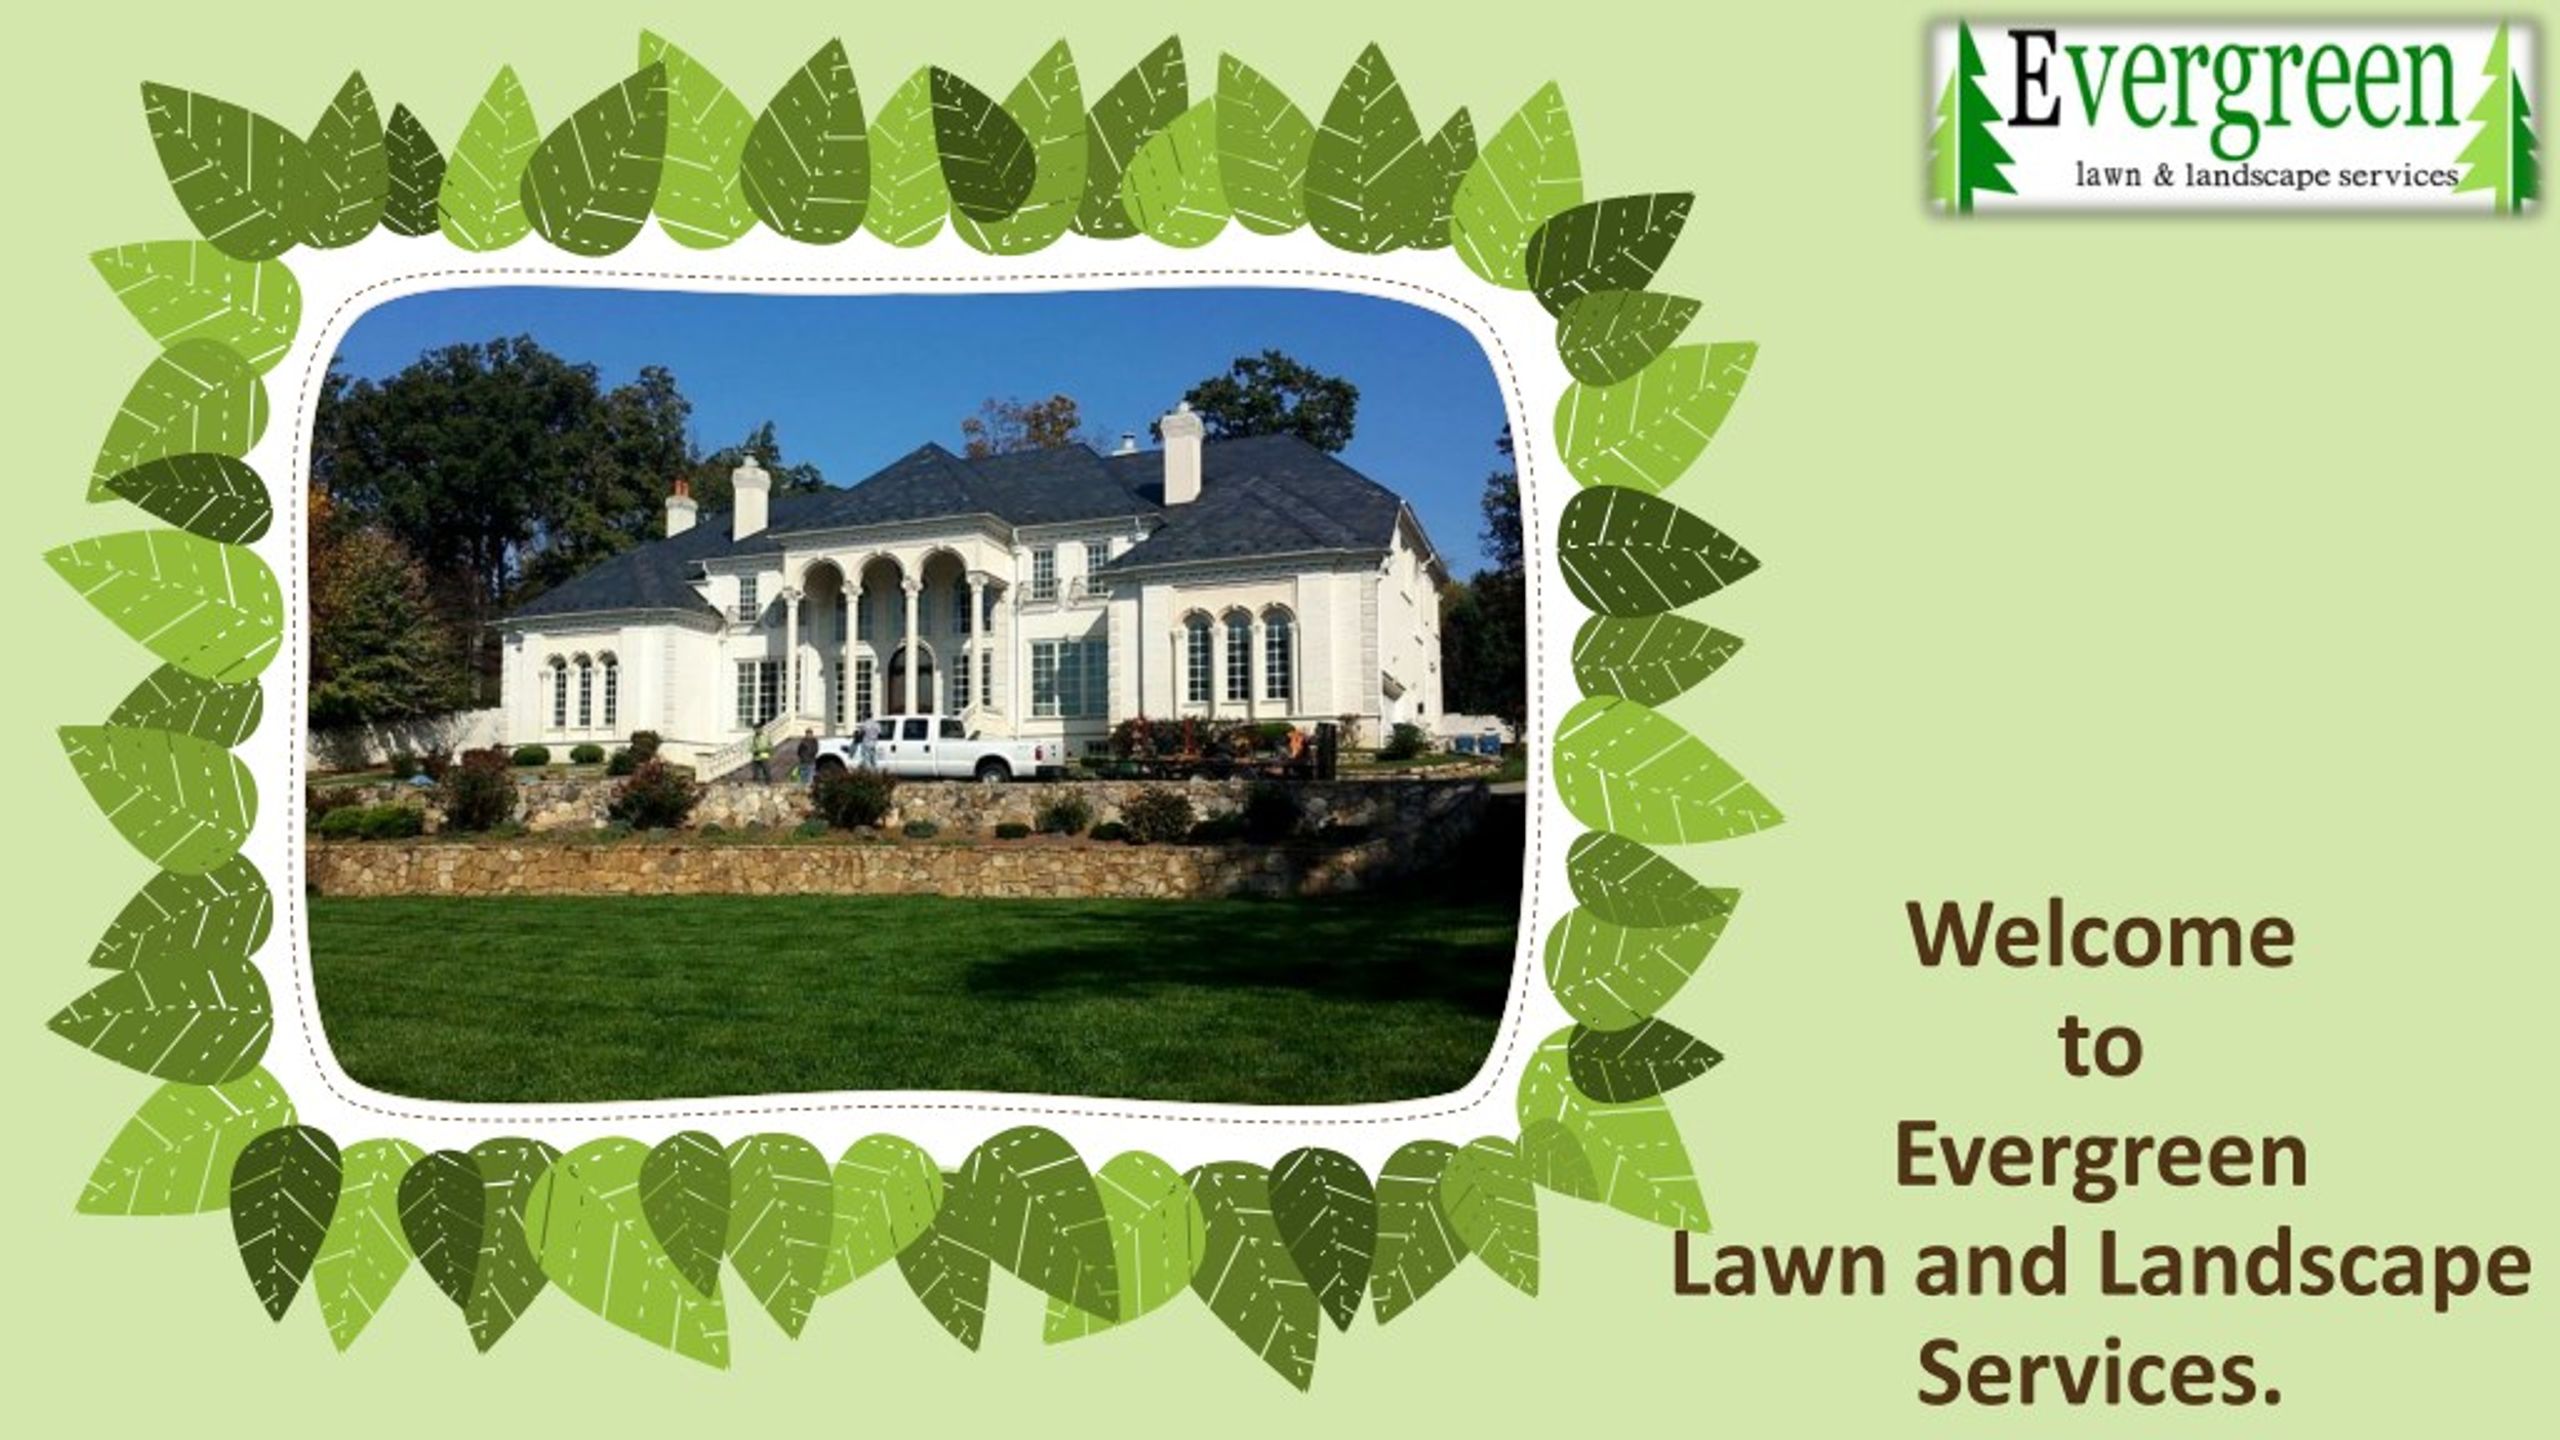 Evergreen Llc Powerpoint Presentation, Evergreen Lawn And Landscape